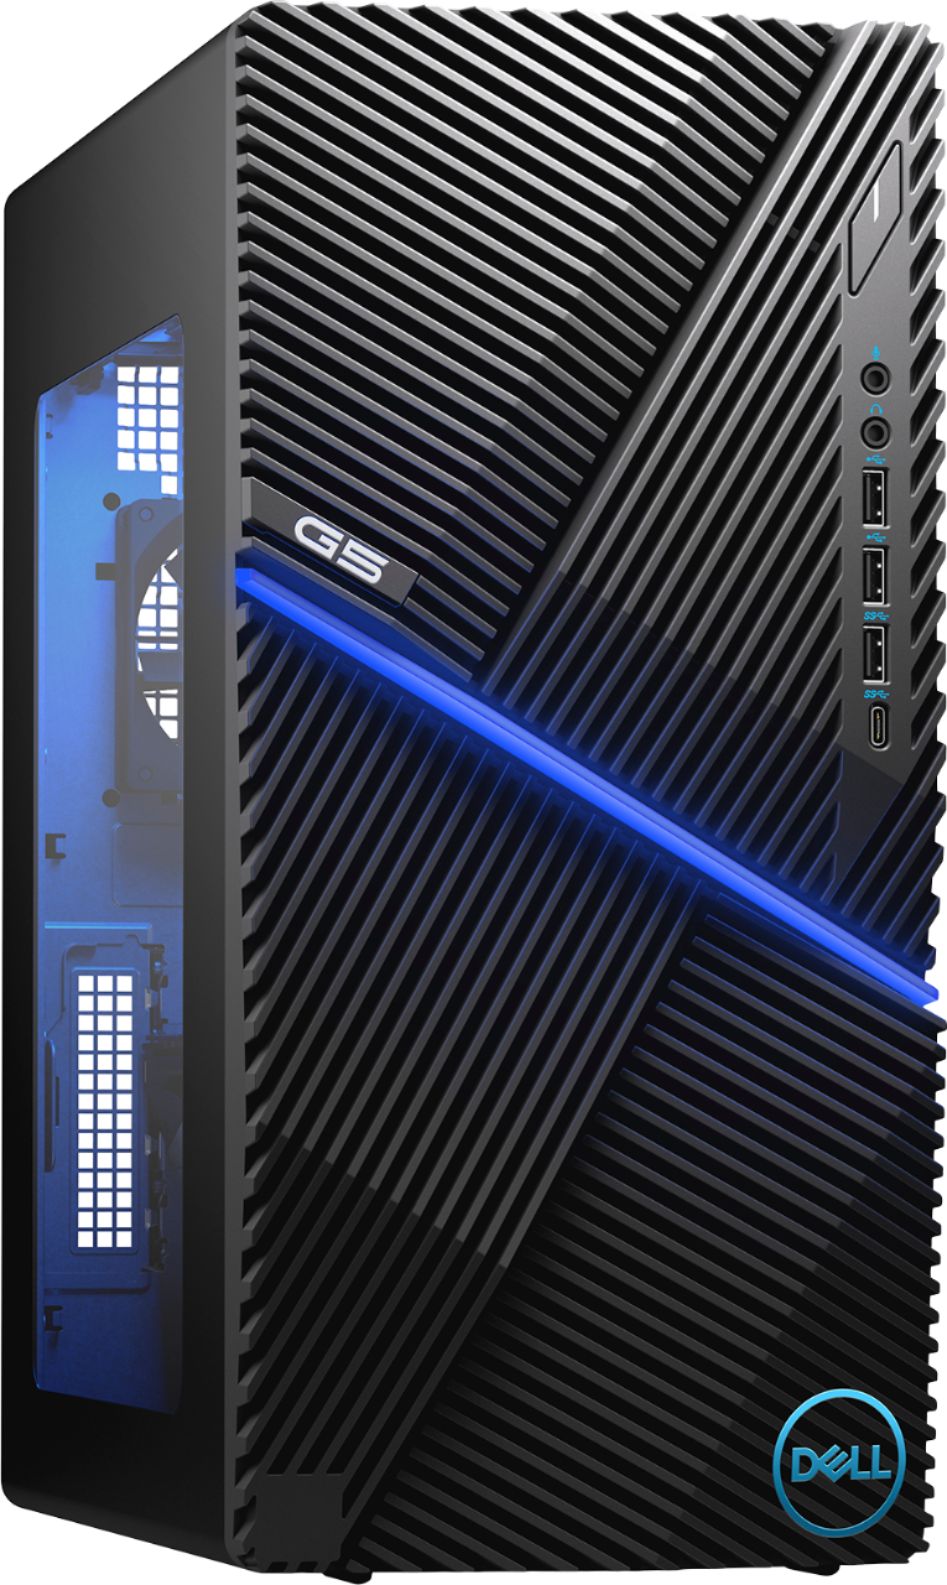 Dell G5 Gaming Desktop Intel Core I5 f 8gb Ram Nvidia Geforce Gtx 1660 Super 1tb Hdd 256 Gb Ssd Black Clear Side Panel I5000 5378blk Pus Best Buy